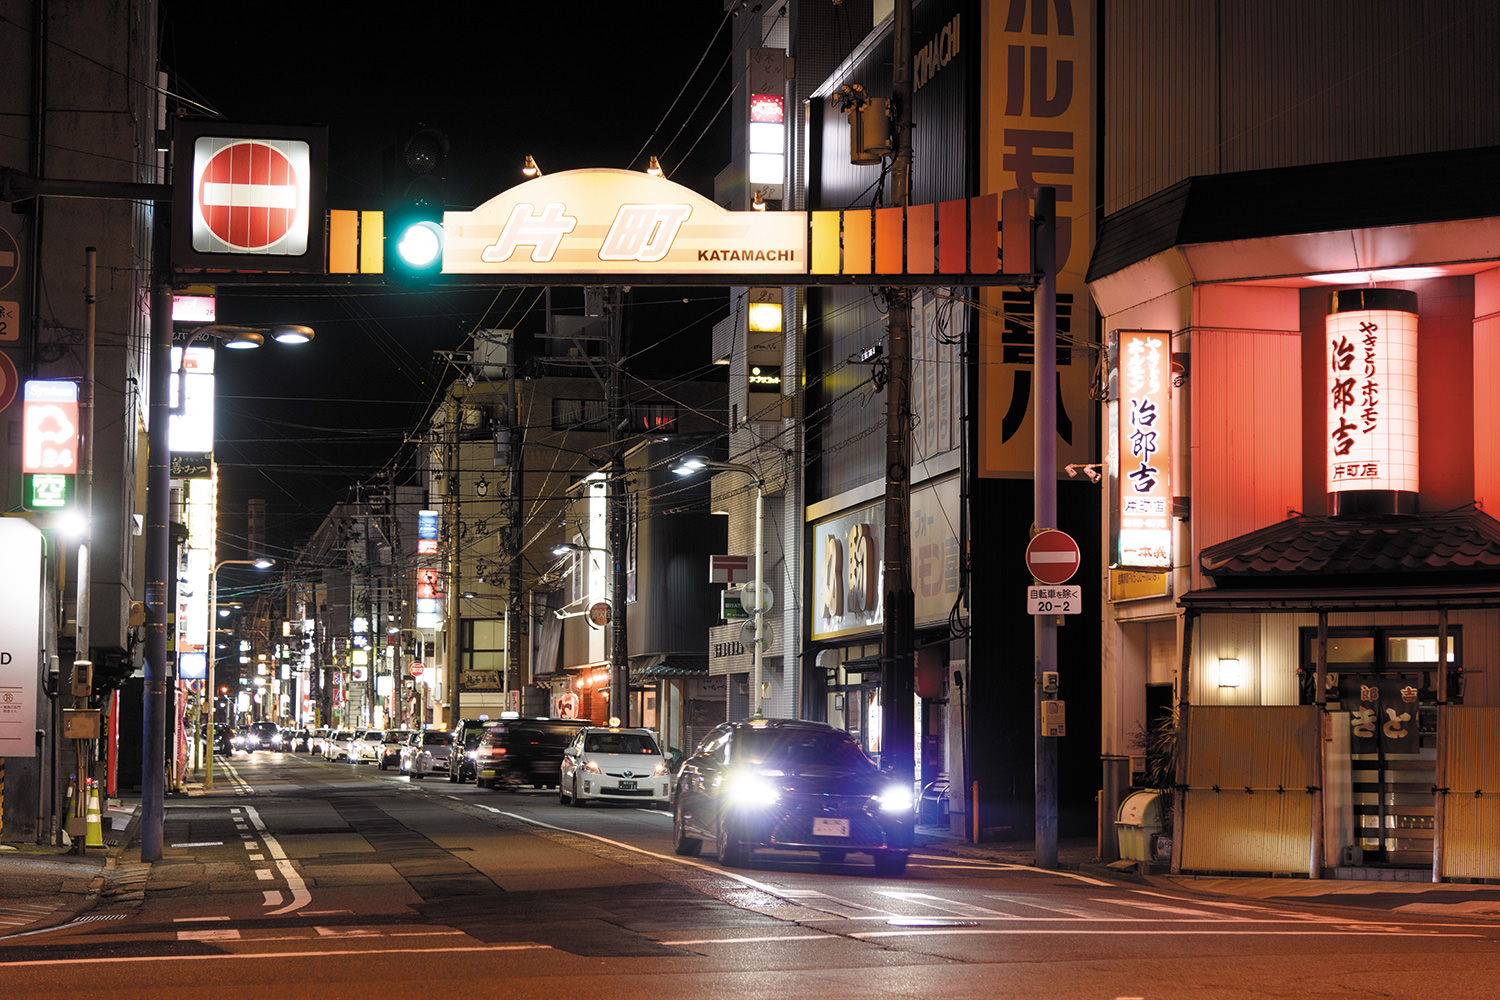 Katamachi and Hamamachi Nightlife Districts